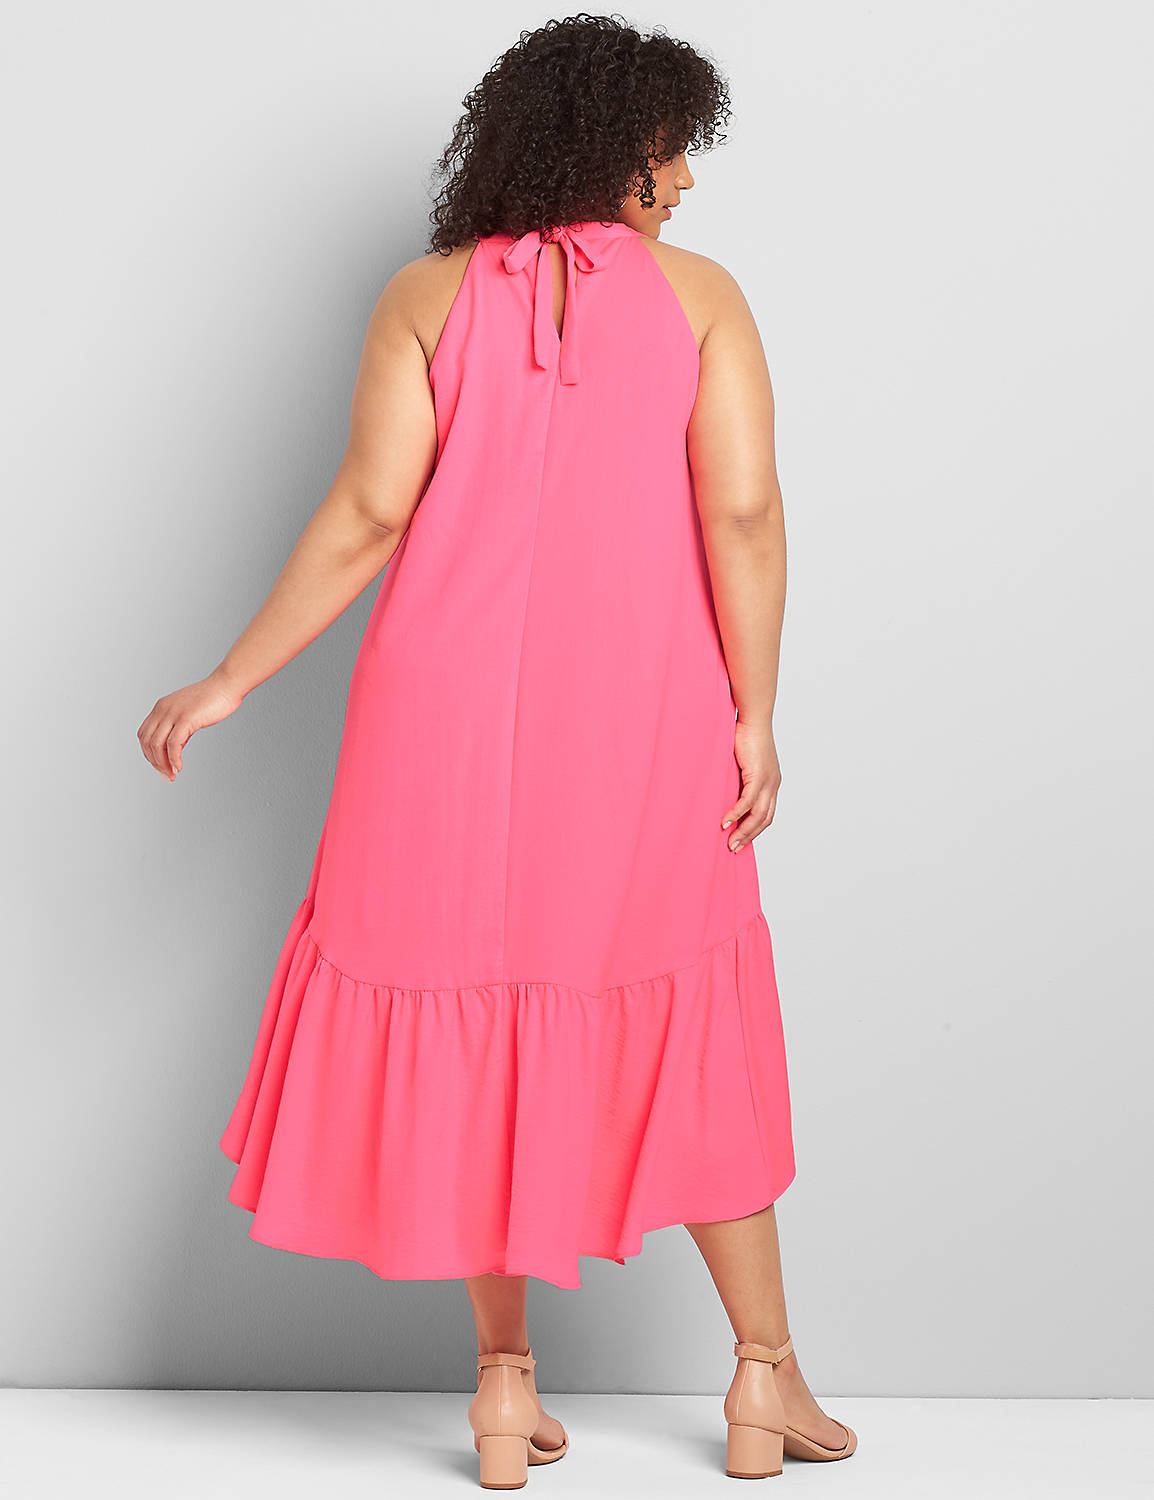 Sleeveless Halter Neck High Low Trapeze Dress 1120011:PANTONE Knockout Pink:18/20 Product Image 2